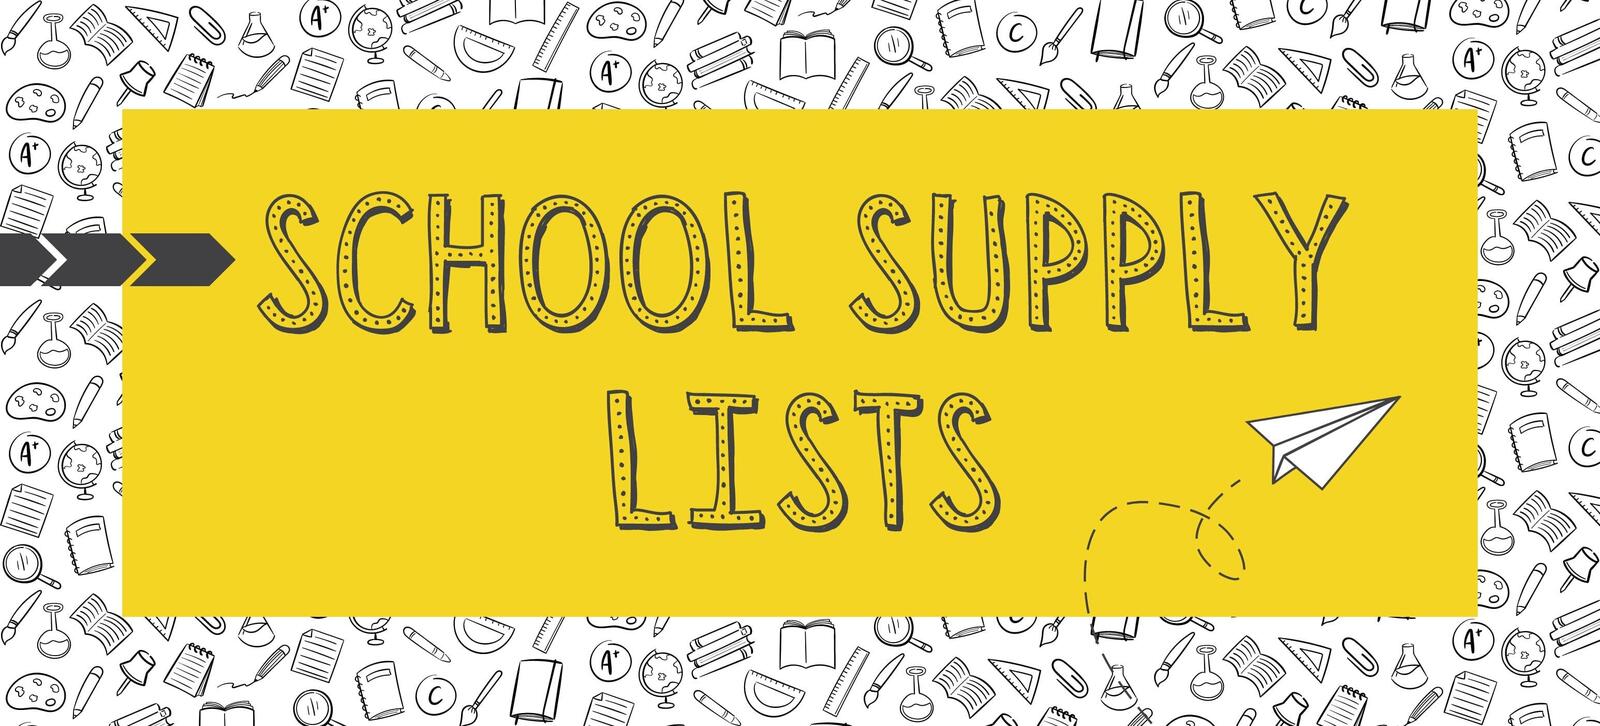 School Supplies List